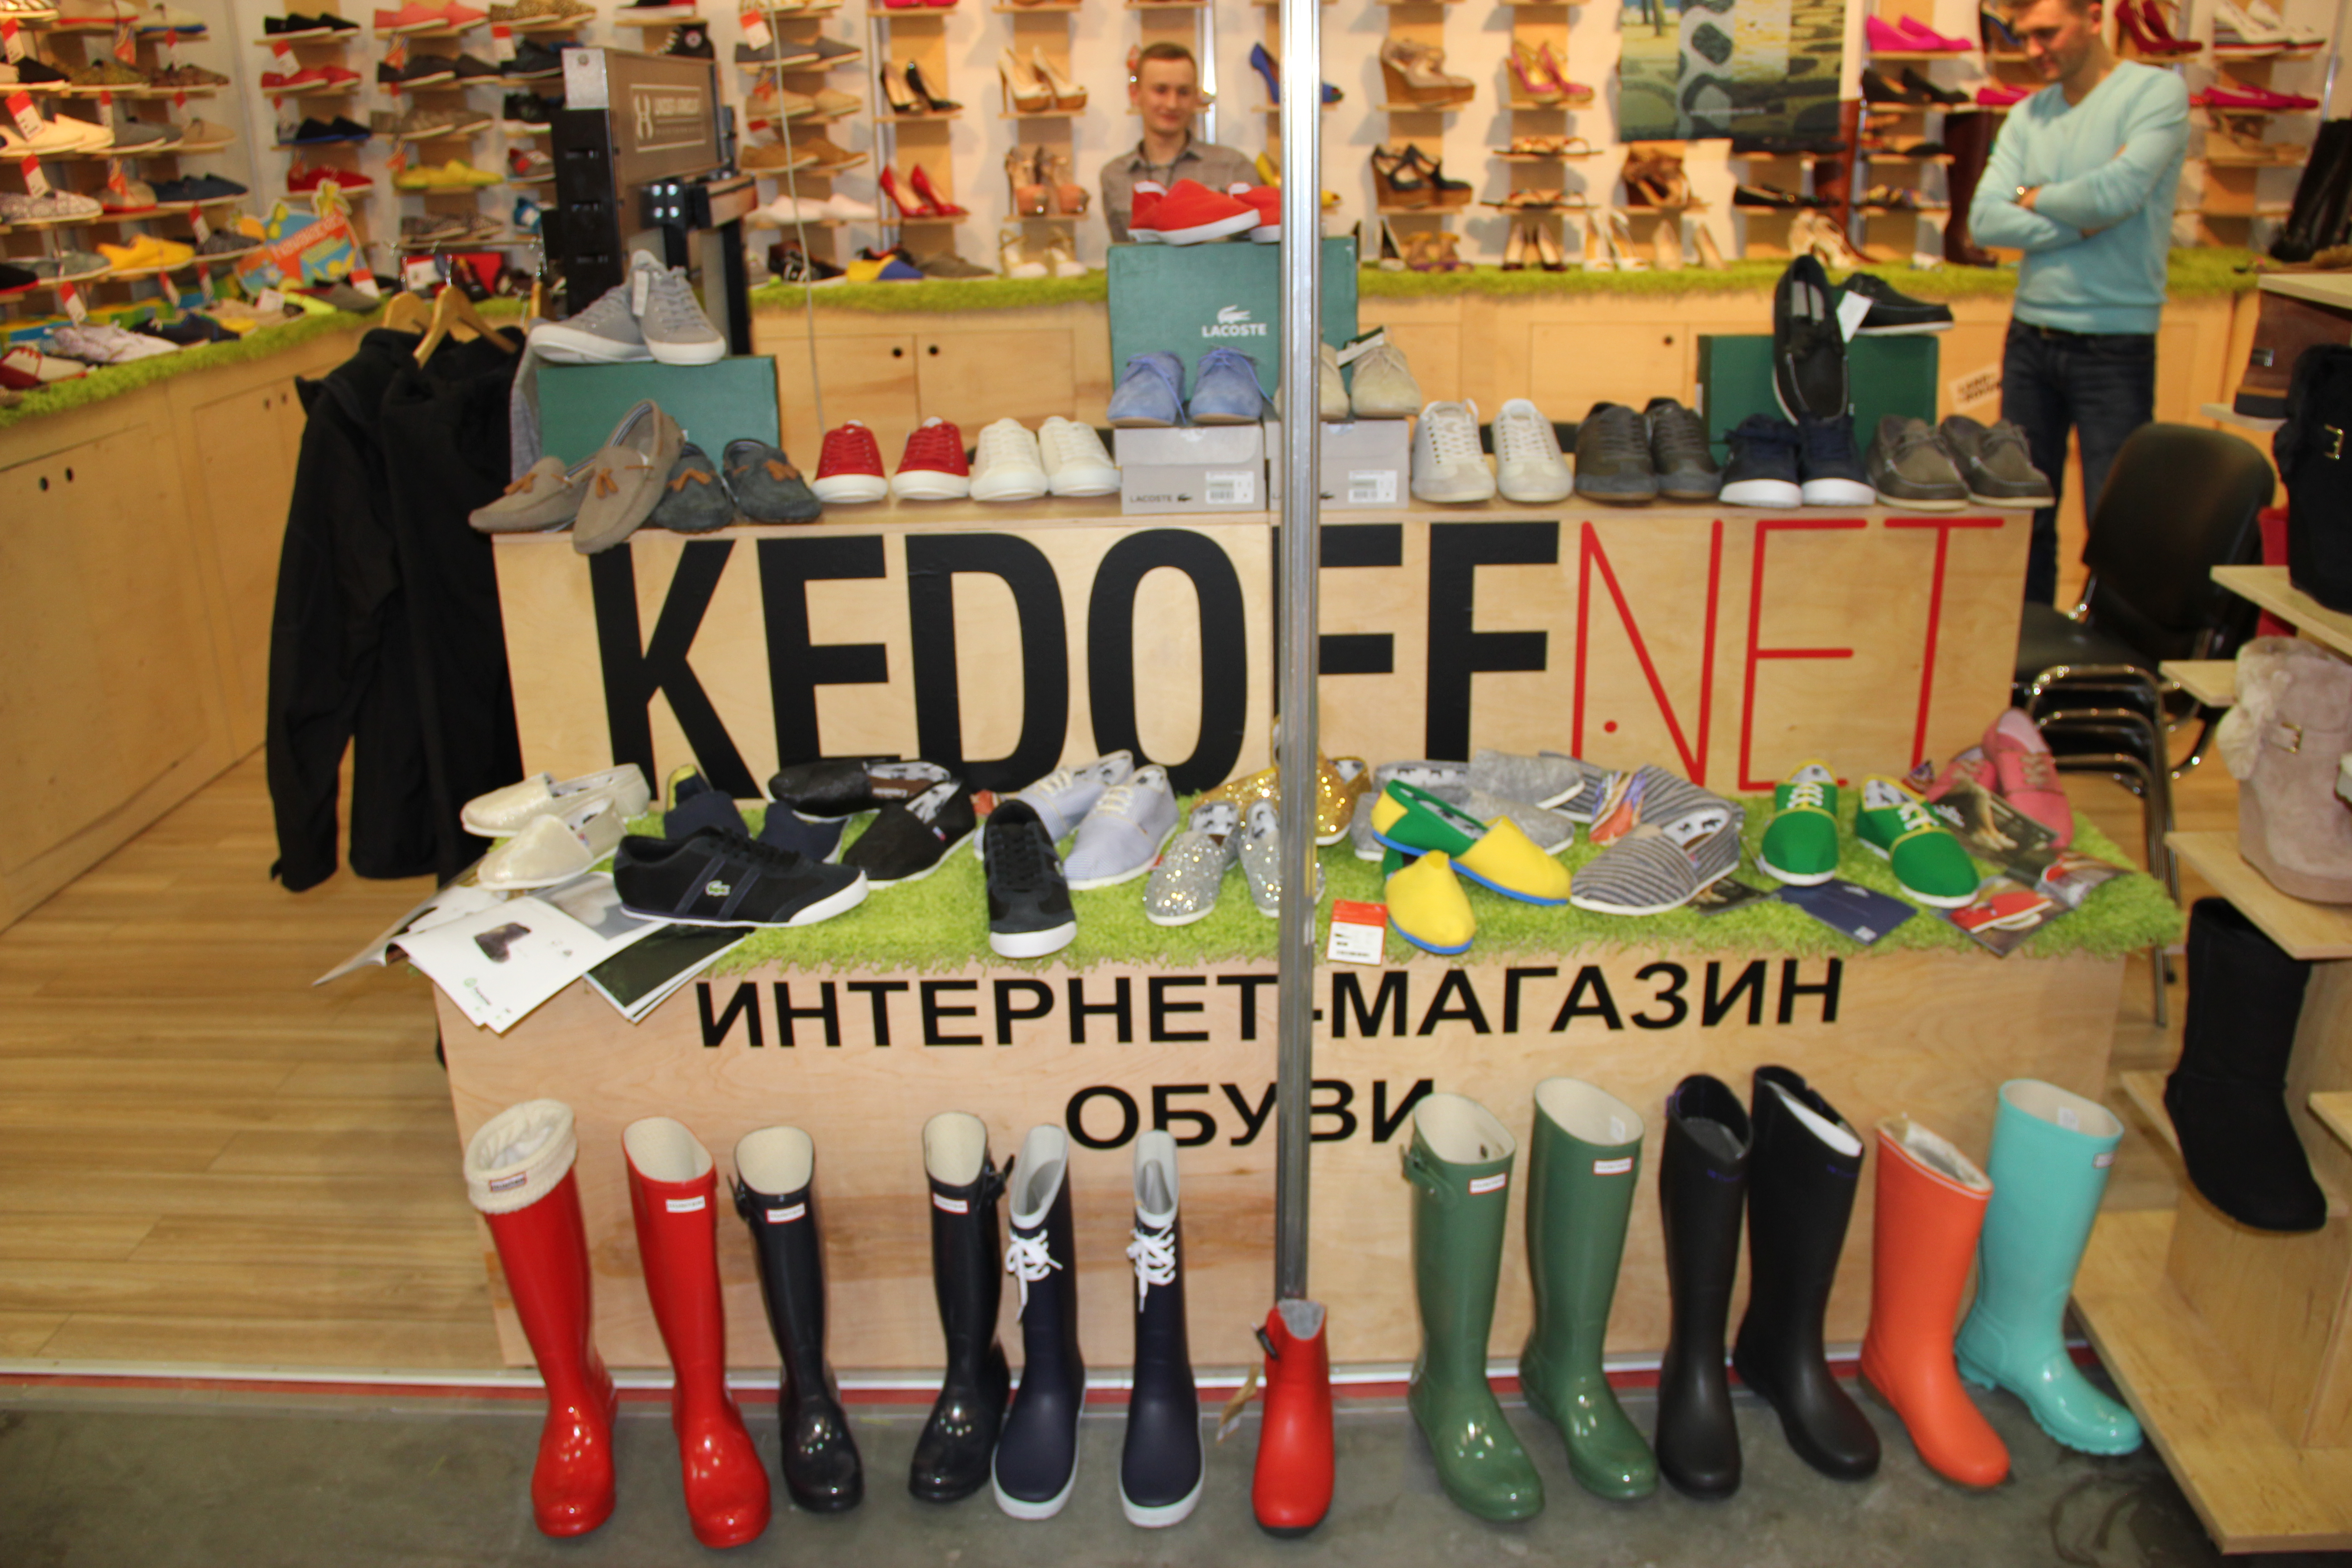 Kedoff.net на Leather and Shoes 2014